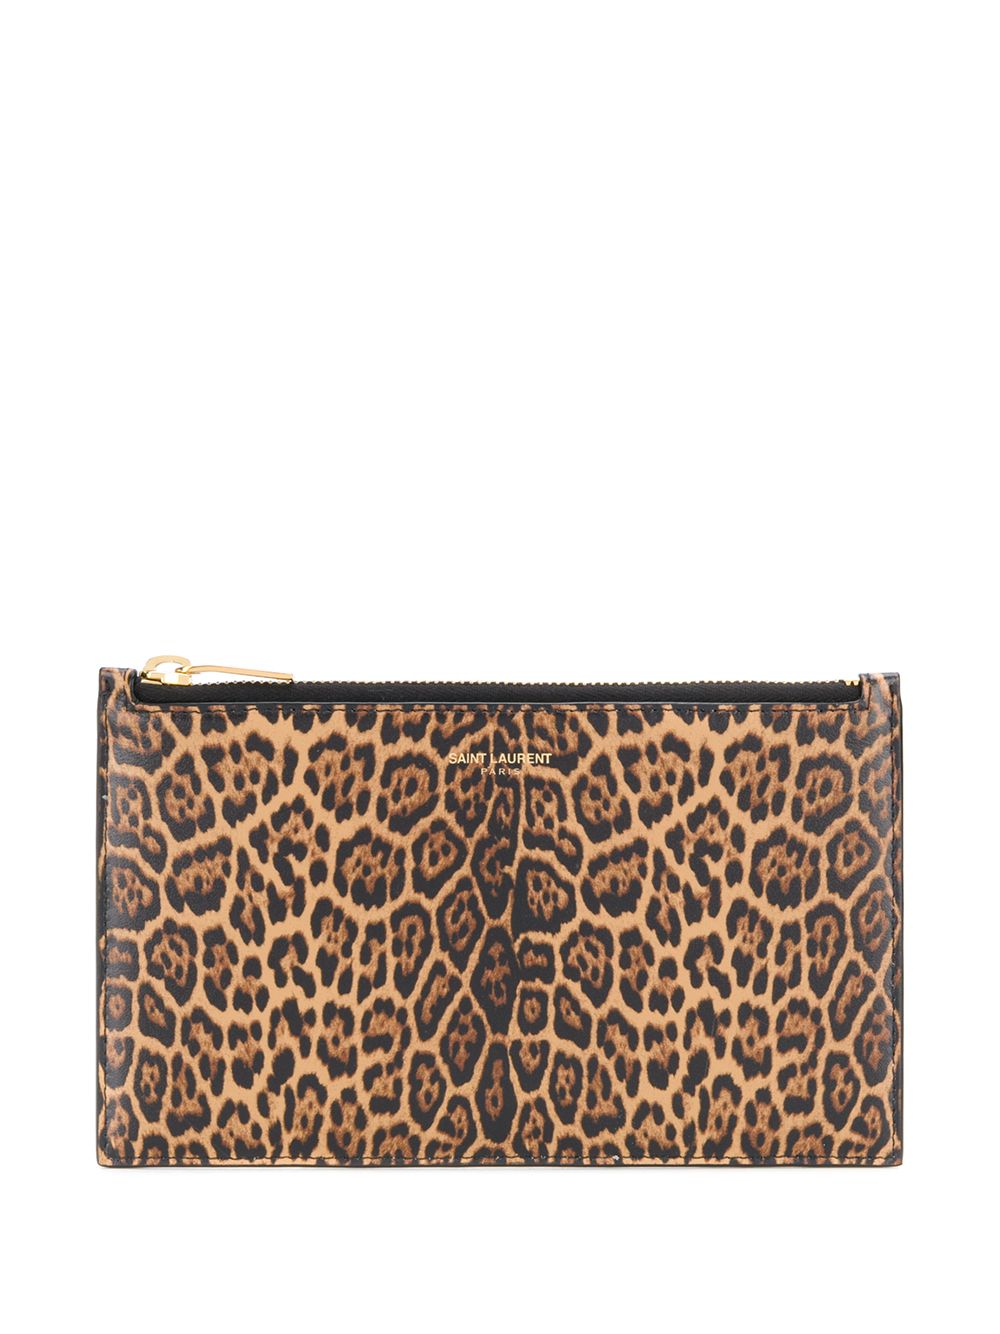 Shop Saint Laurent leopard print clutch with Express Delivery - FARFETCH